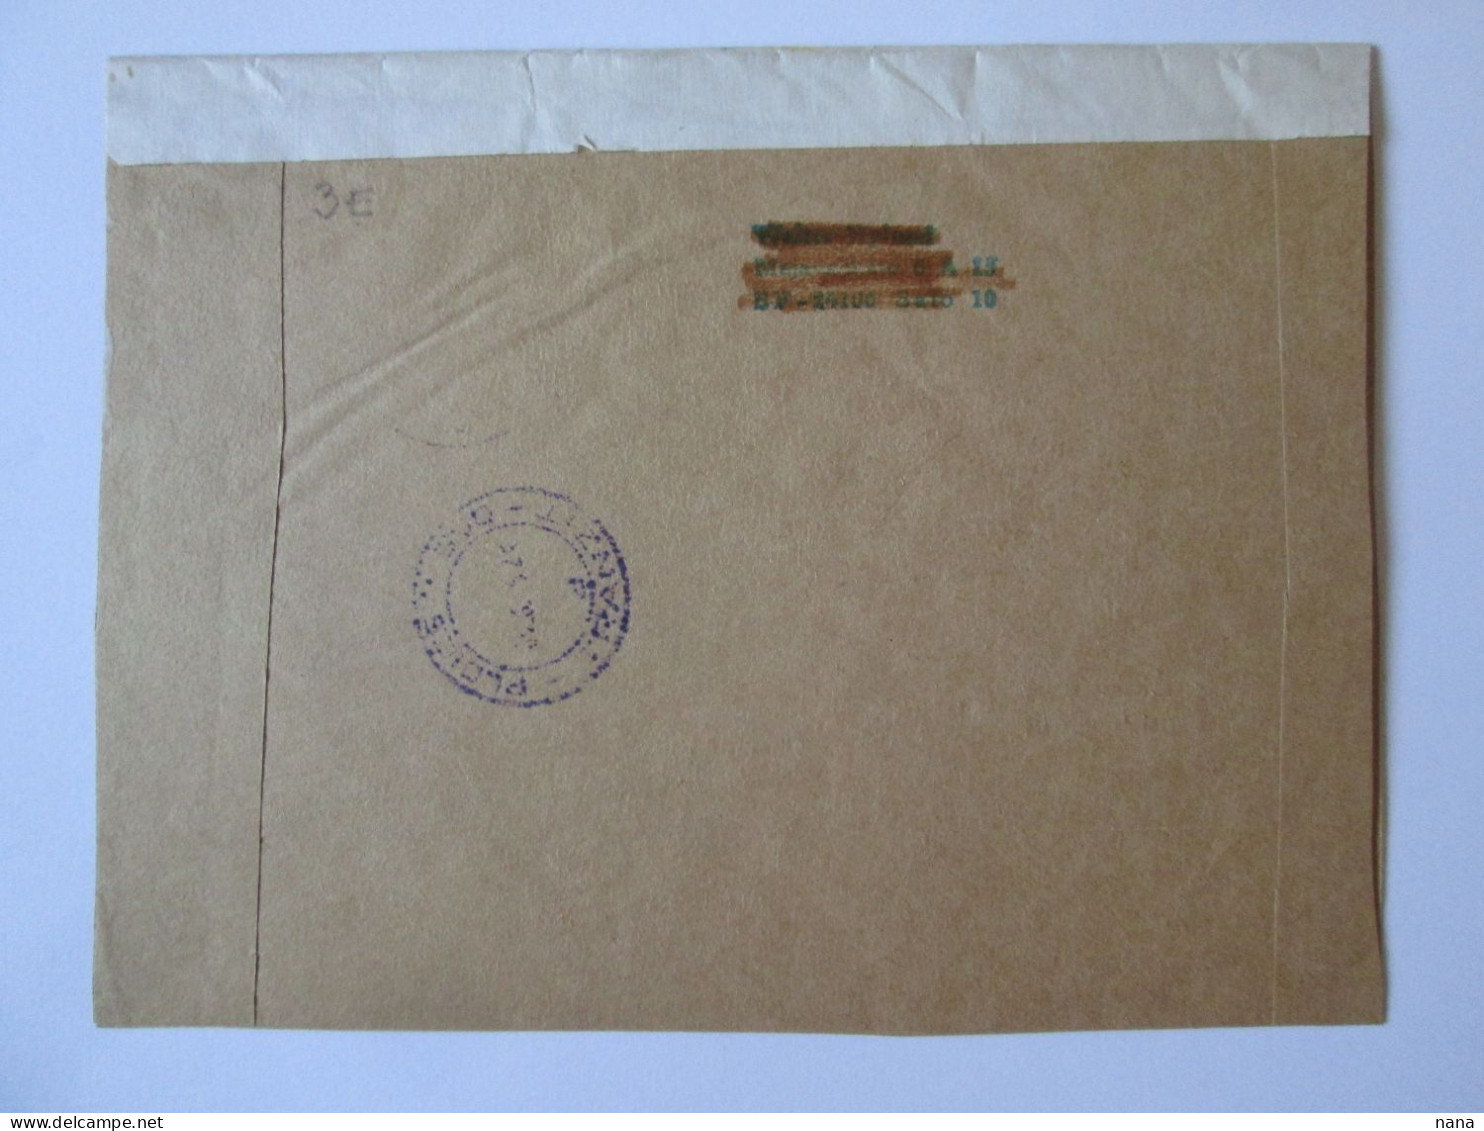 Finlande-Salo Enveloppe Recommandee 1975-Finland-Salo Registered Cover 1975 - Cartes-maximum (CM)